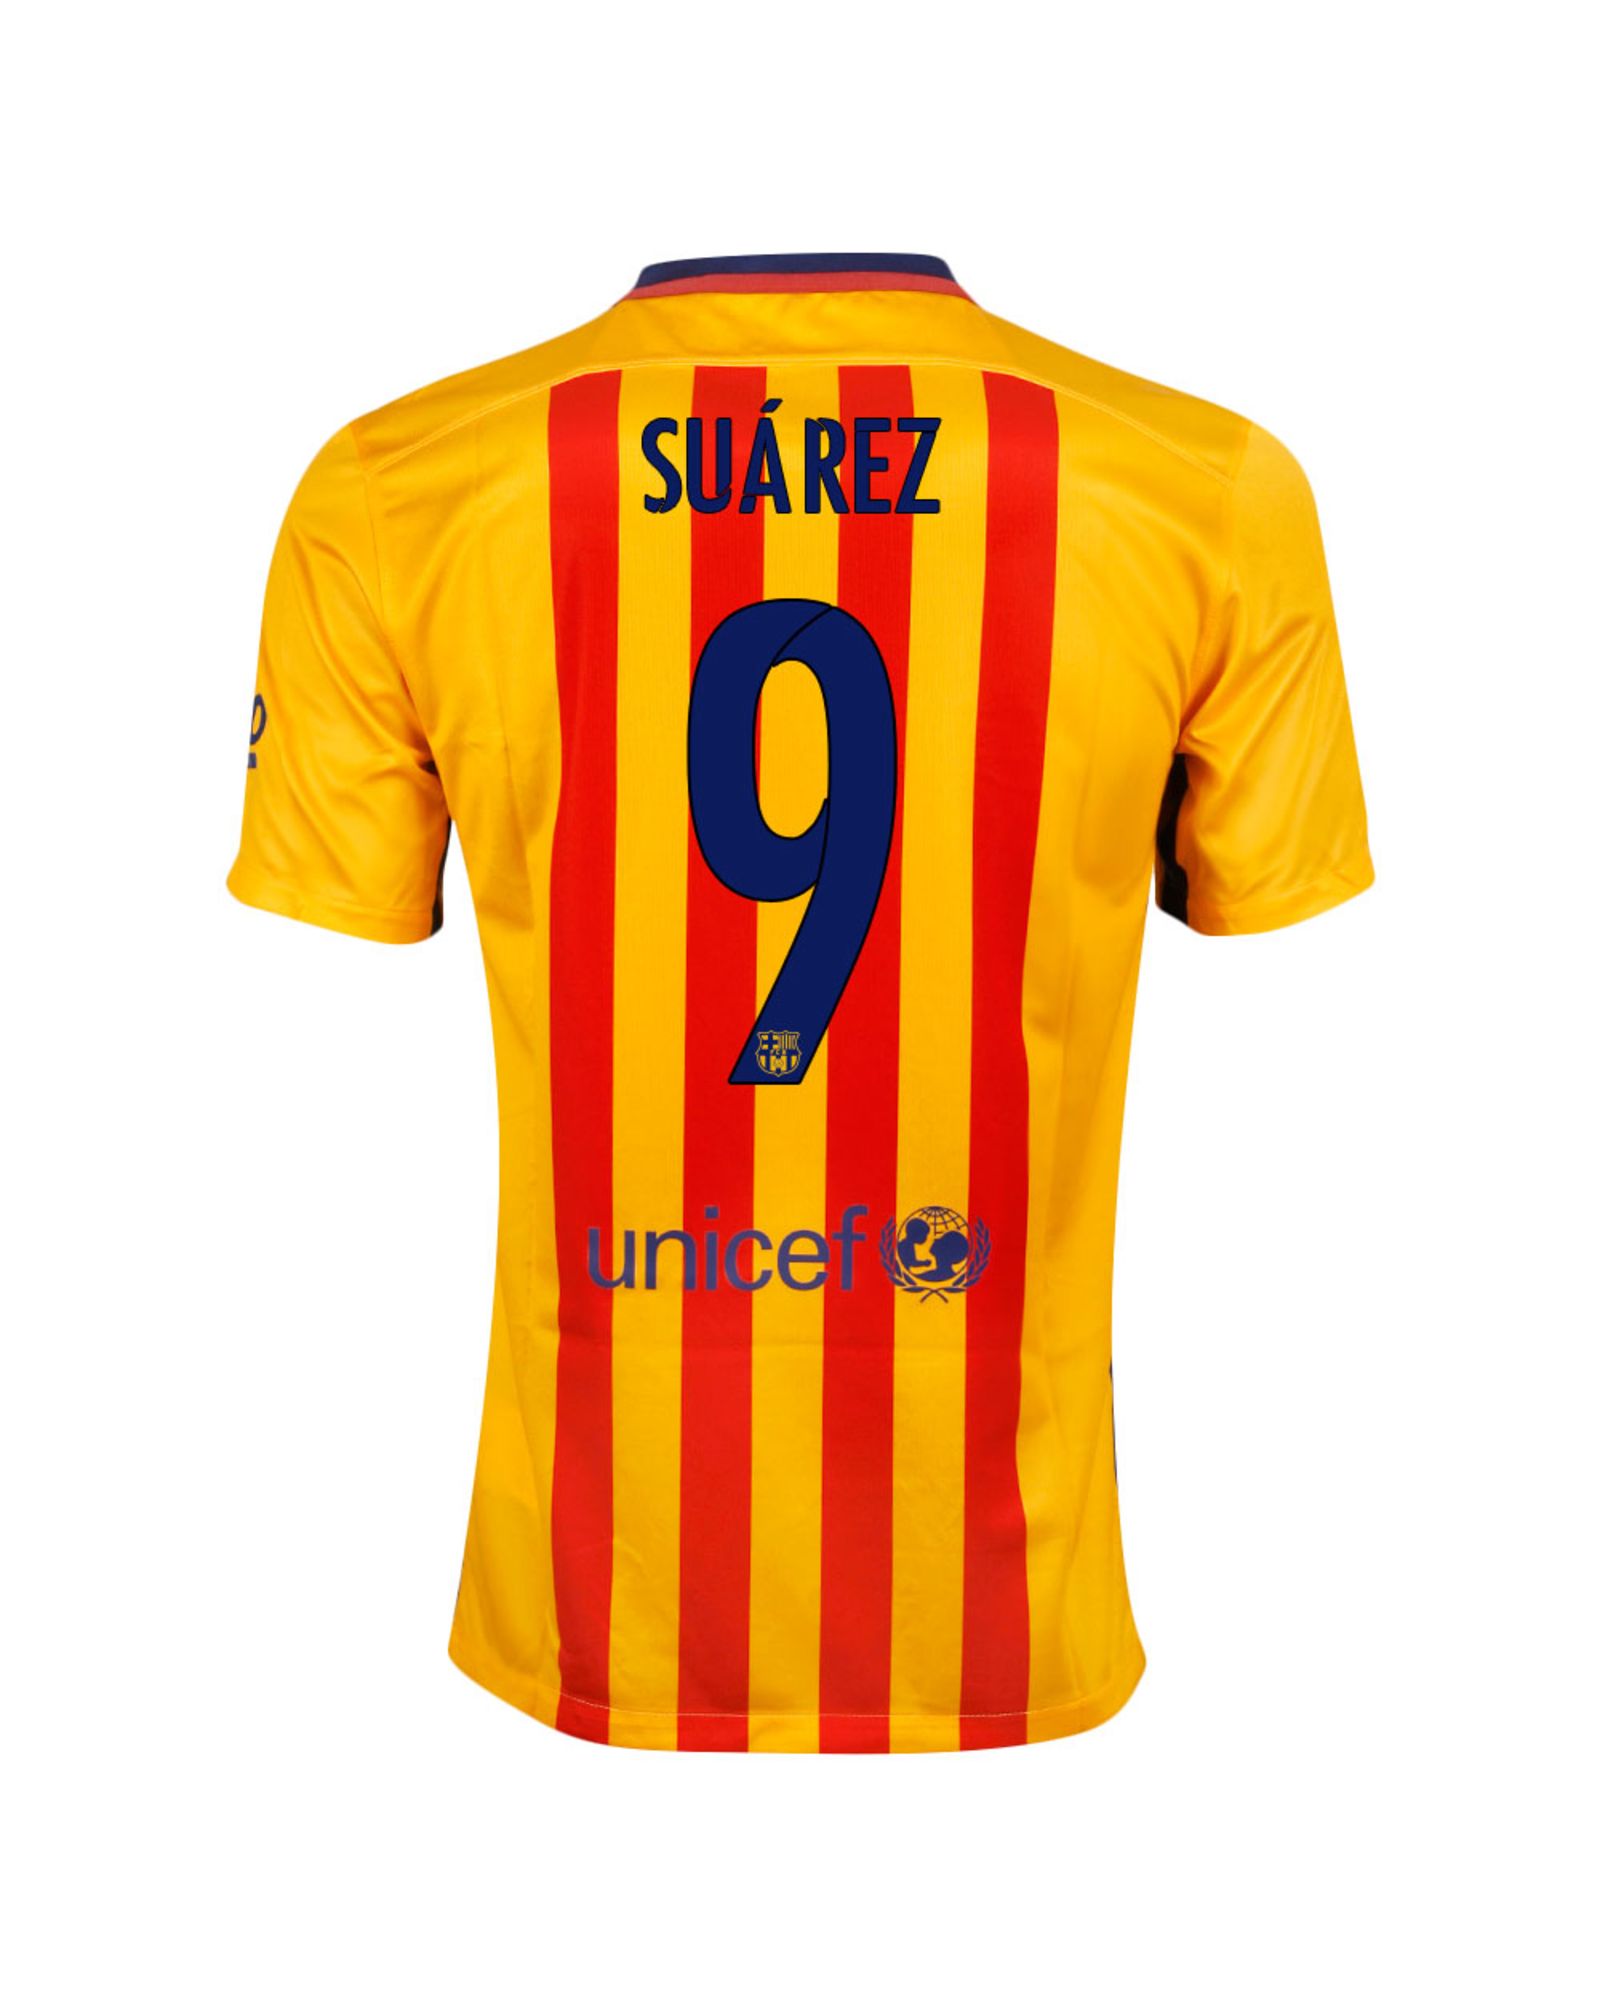 Artefacto de múltiples fines Mendigar Camiseta 2ª FC Barcelona 2015/2016 Suárez Stadium